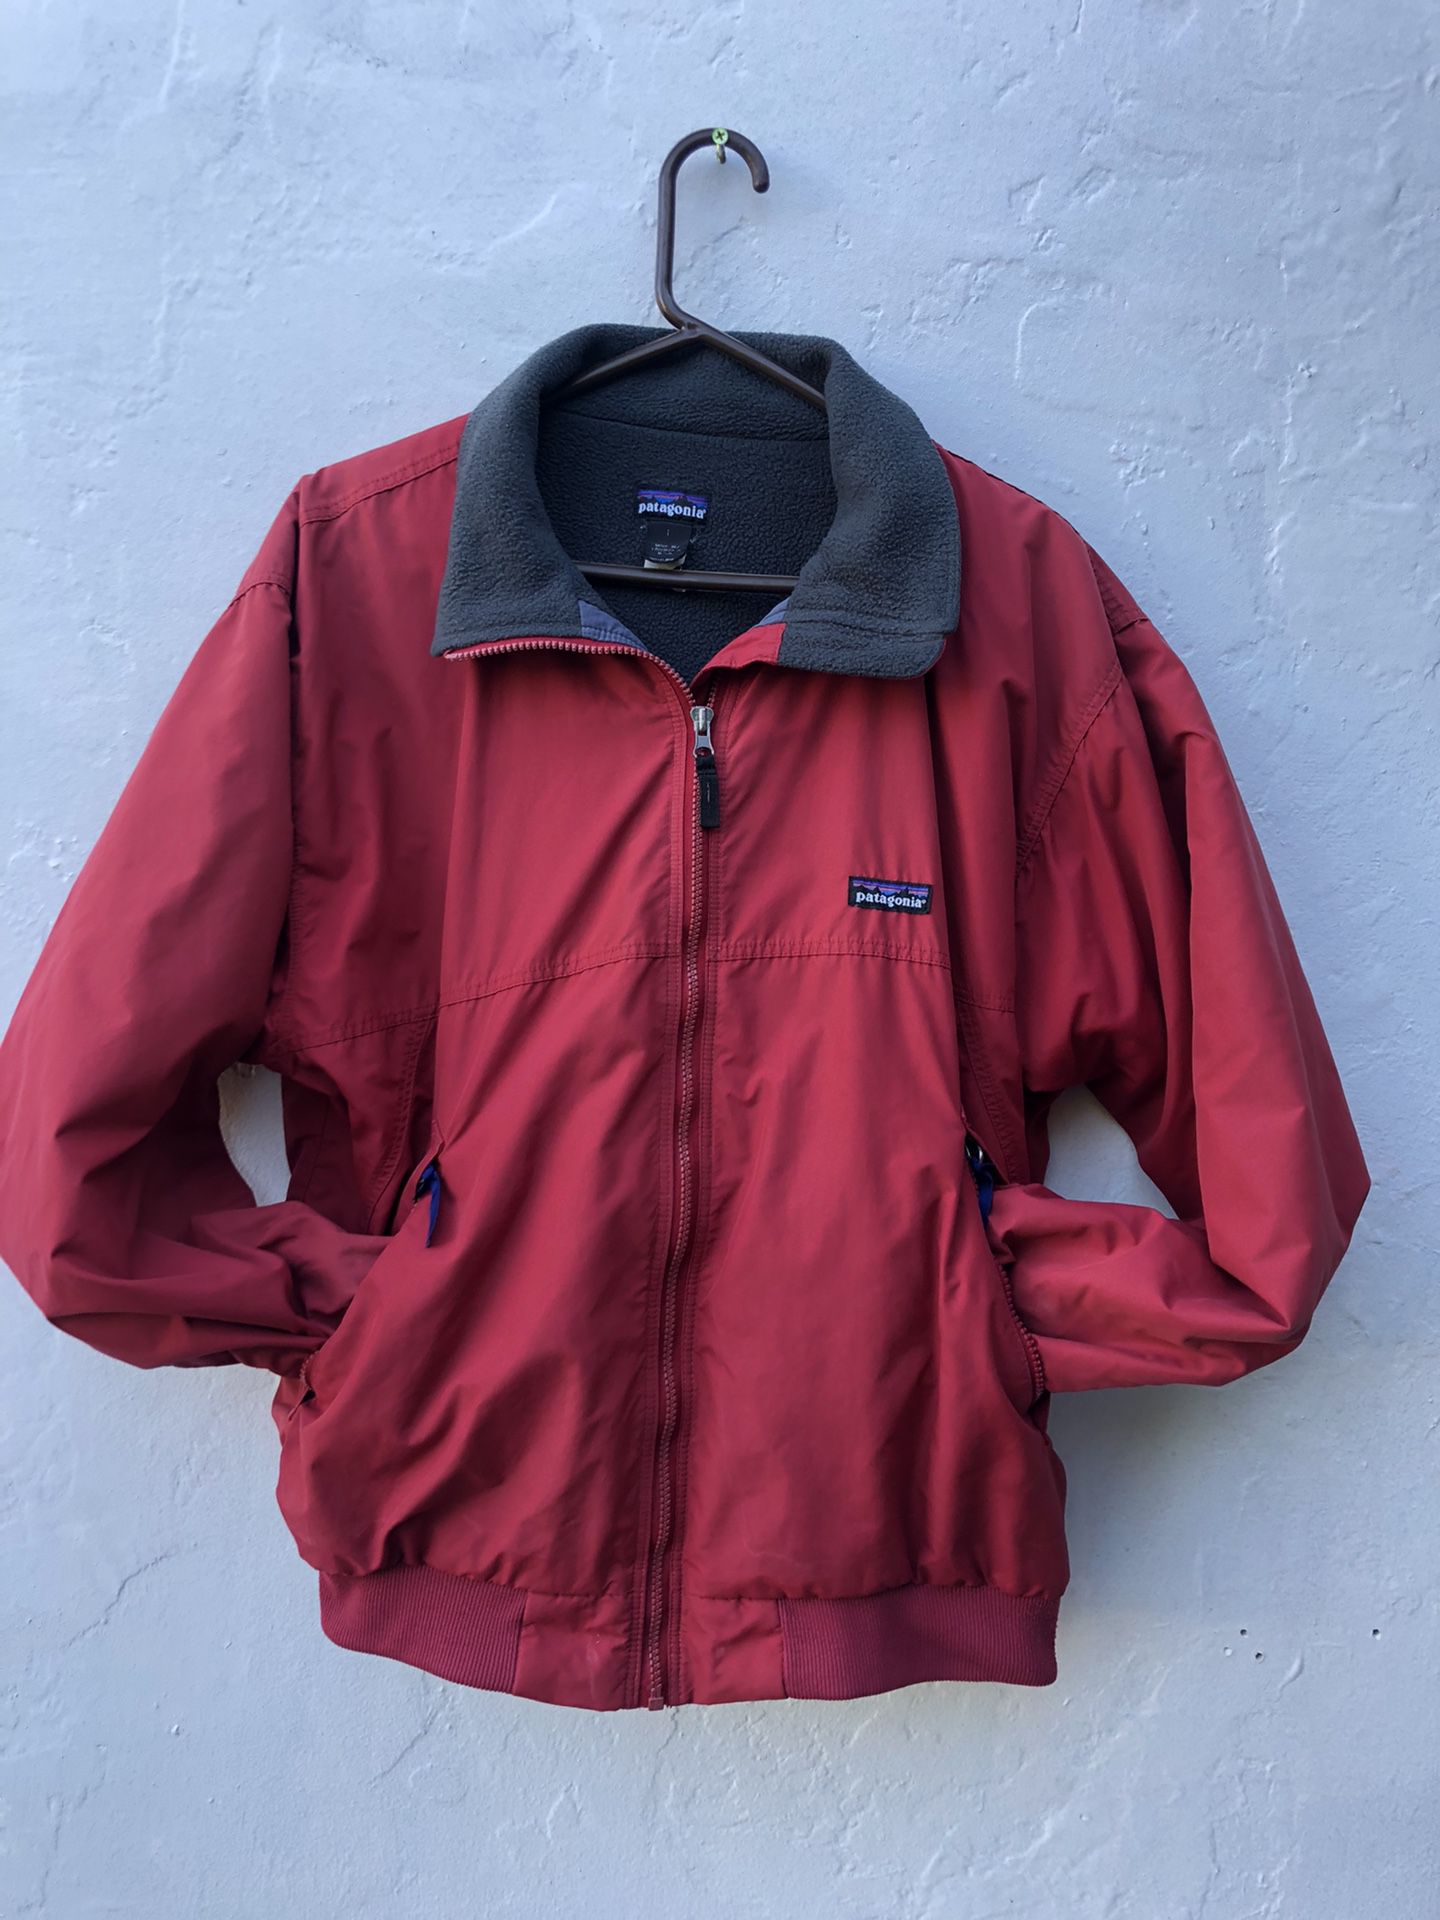 Patagonia Men’s Vintage Jacket Size L